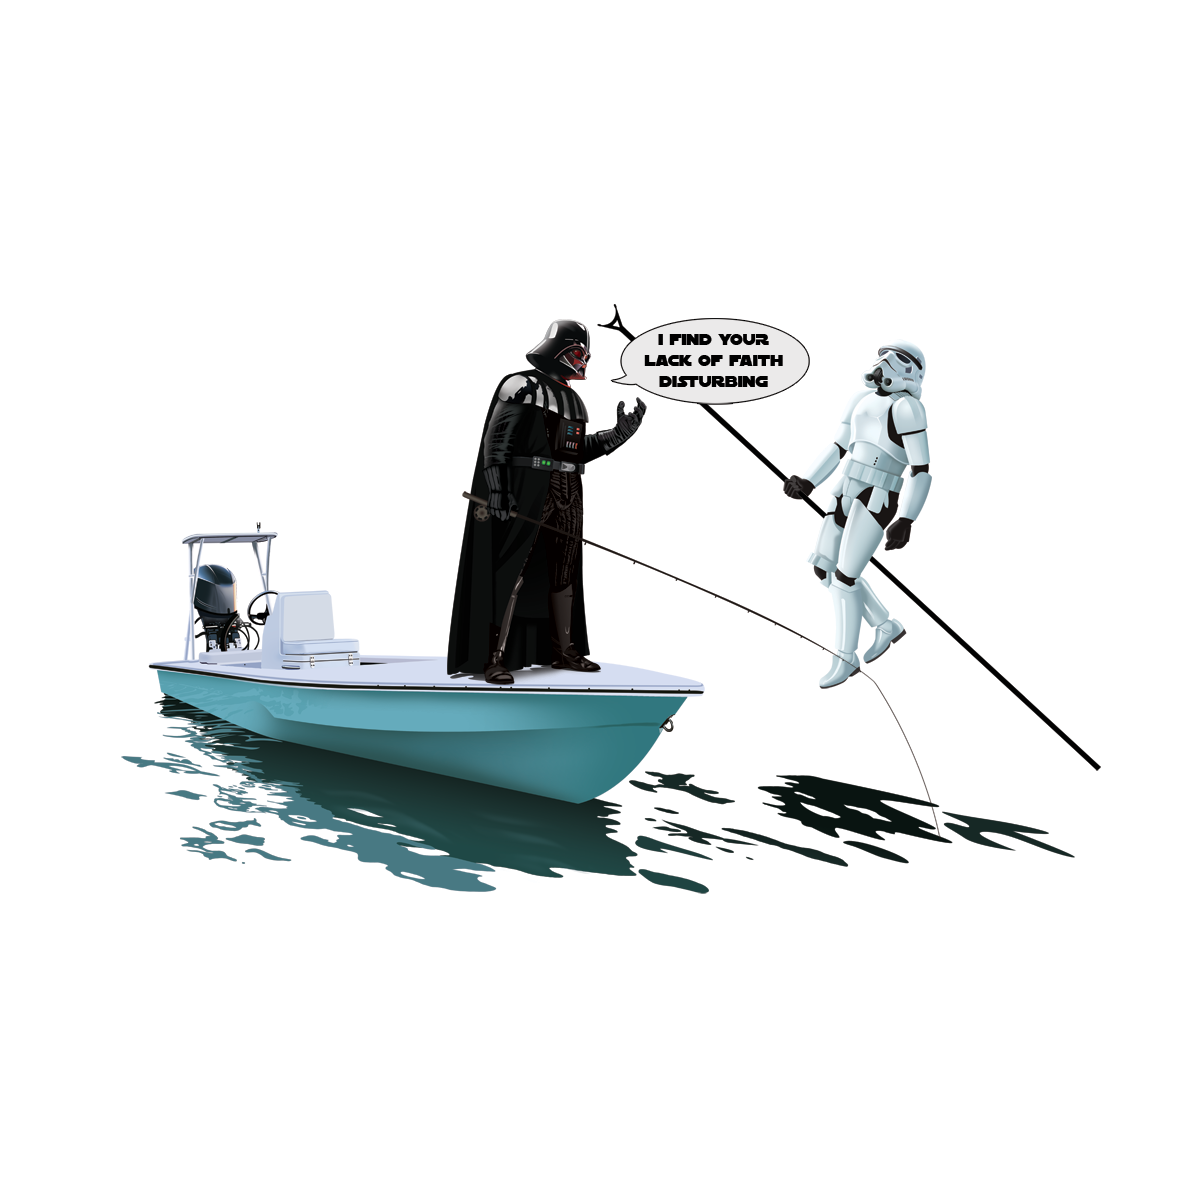 Darth Vader Force Choke Hold Stormtrooper Fishing Decal Sticker - Skiff Life